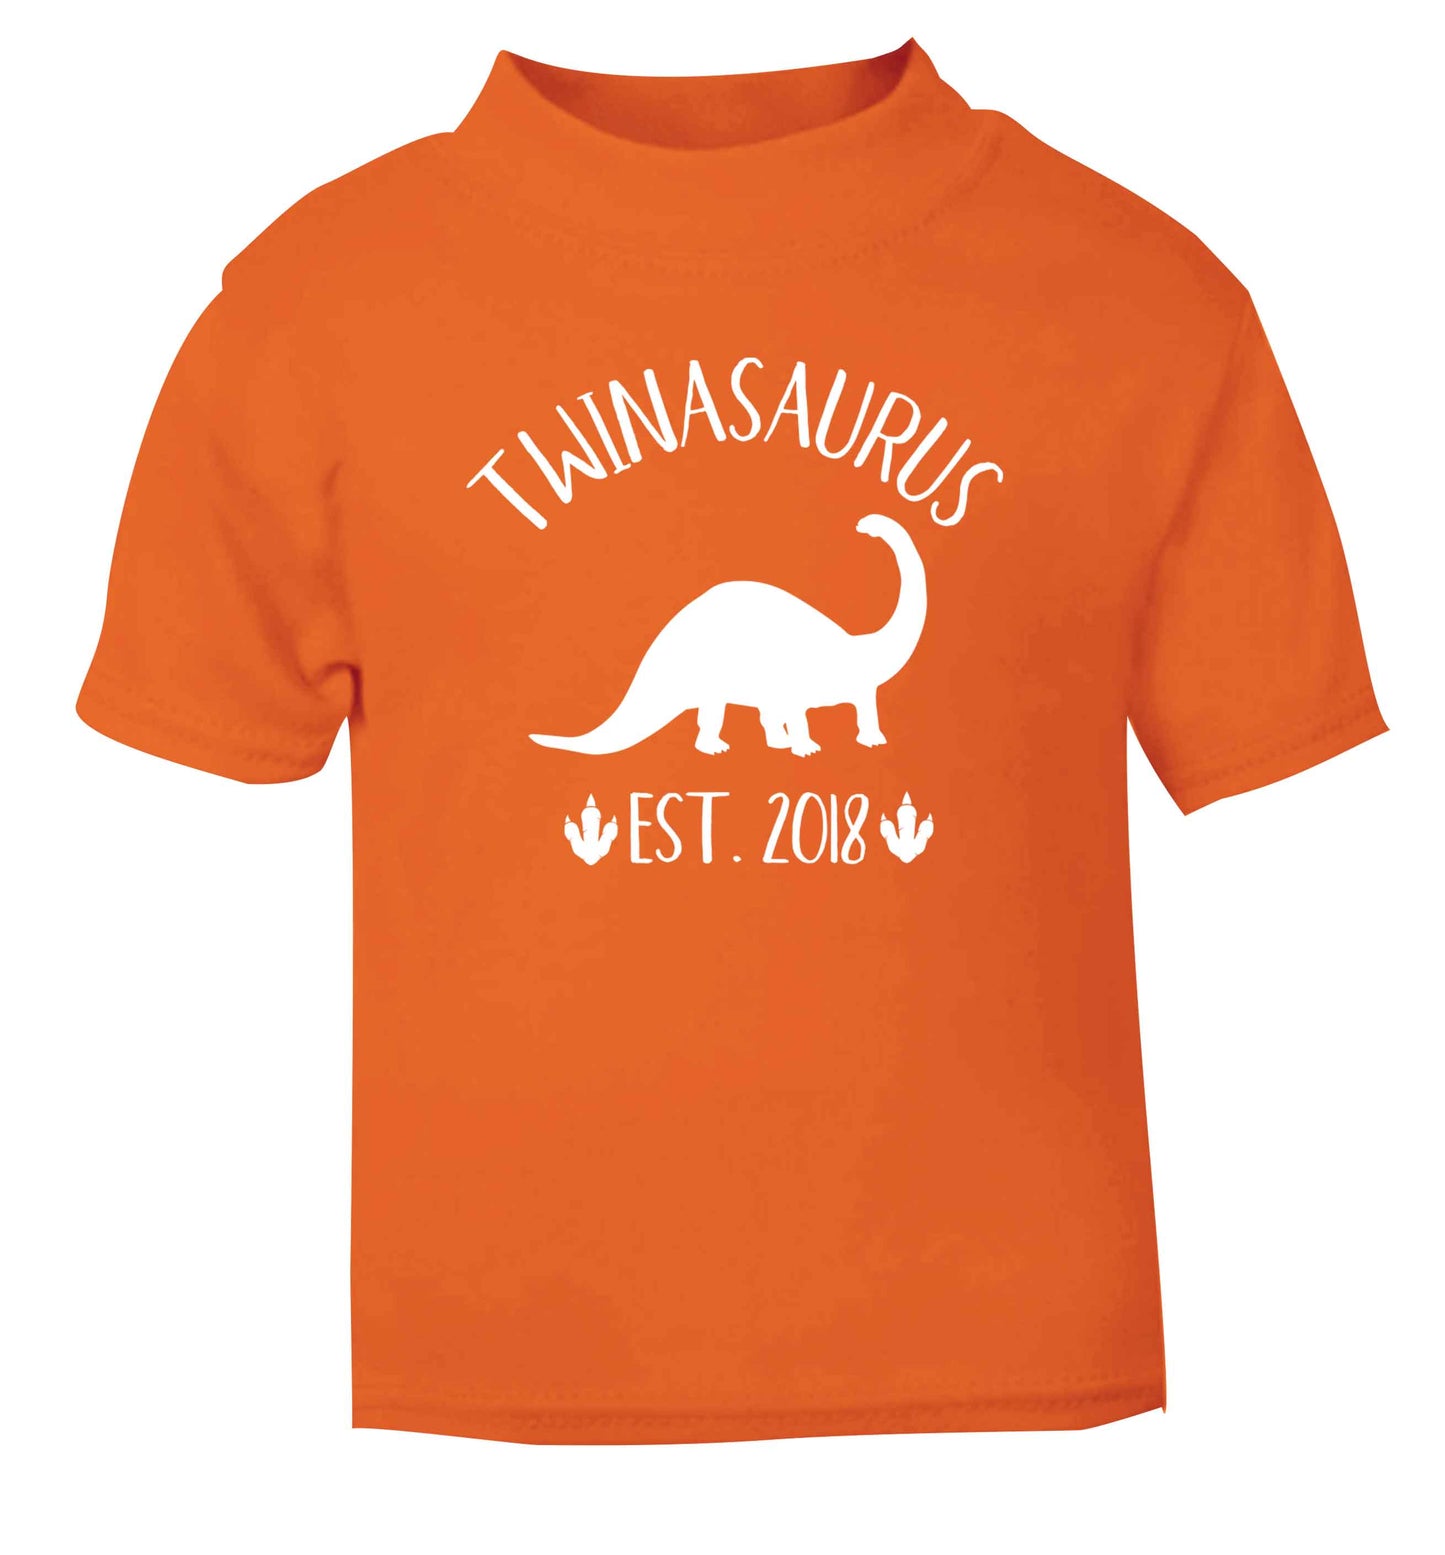 Personalised twinasaurus since (custom date) orange Baby Toddler Tshirt 2 Years